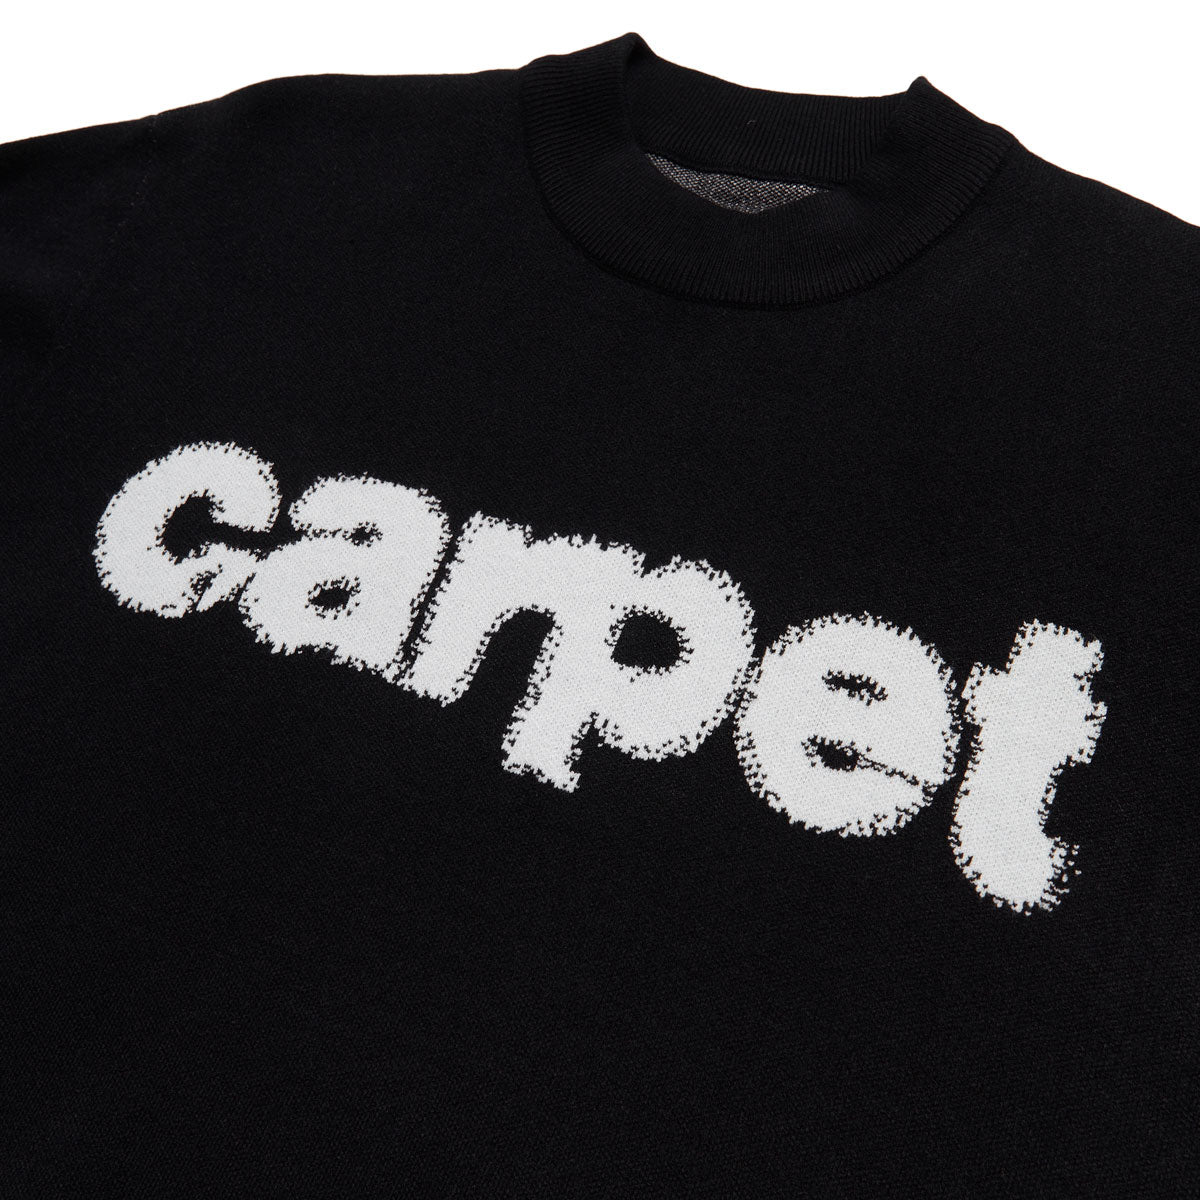 Carpet Company Woven Sweater - Black image 3